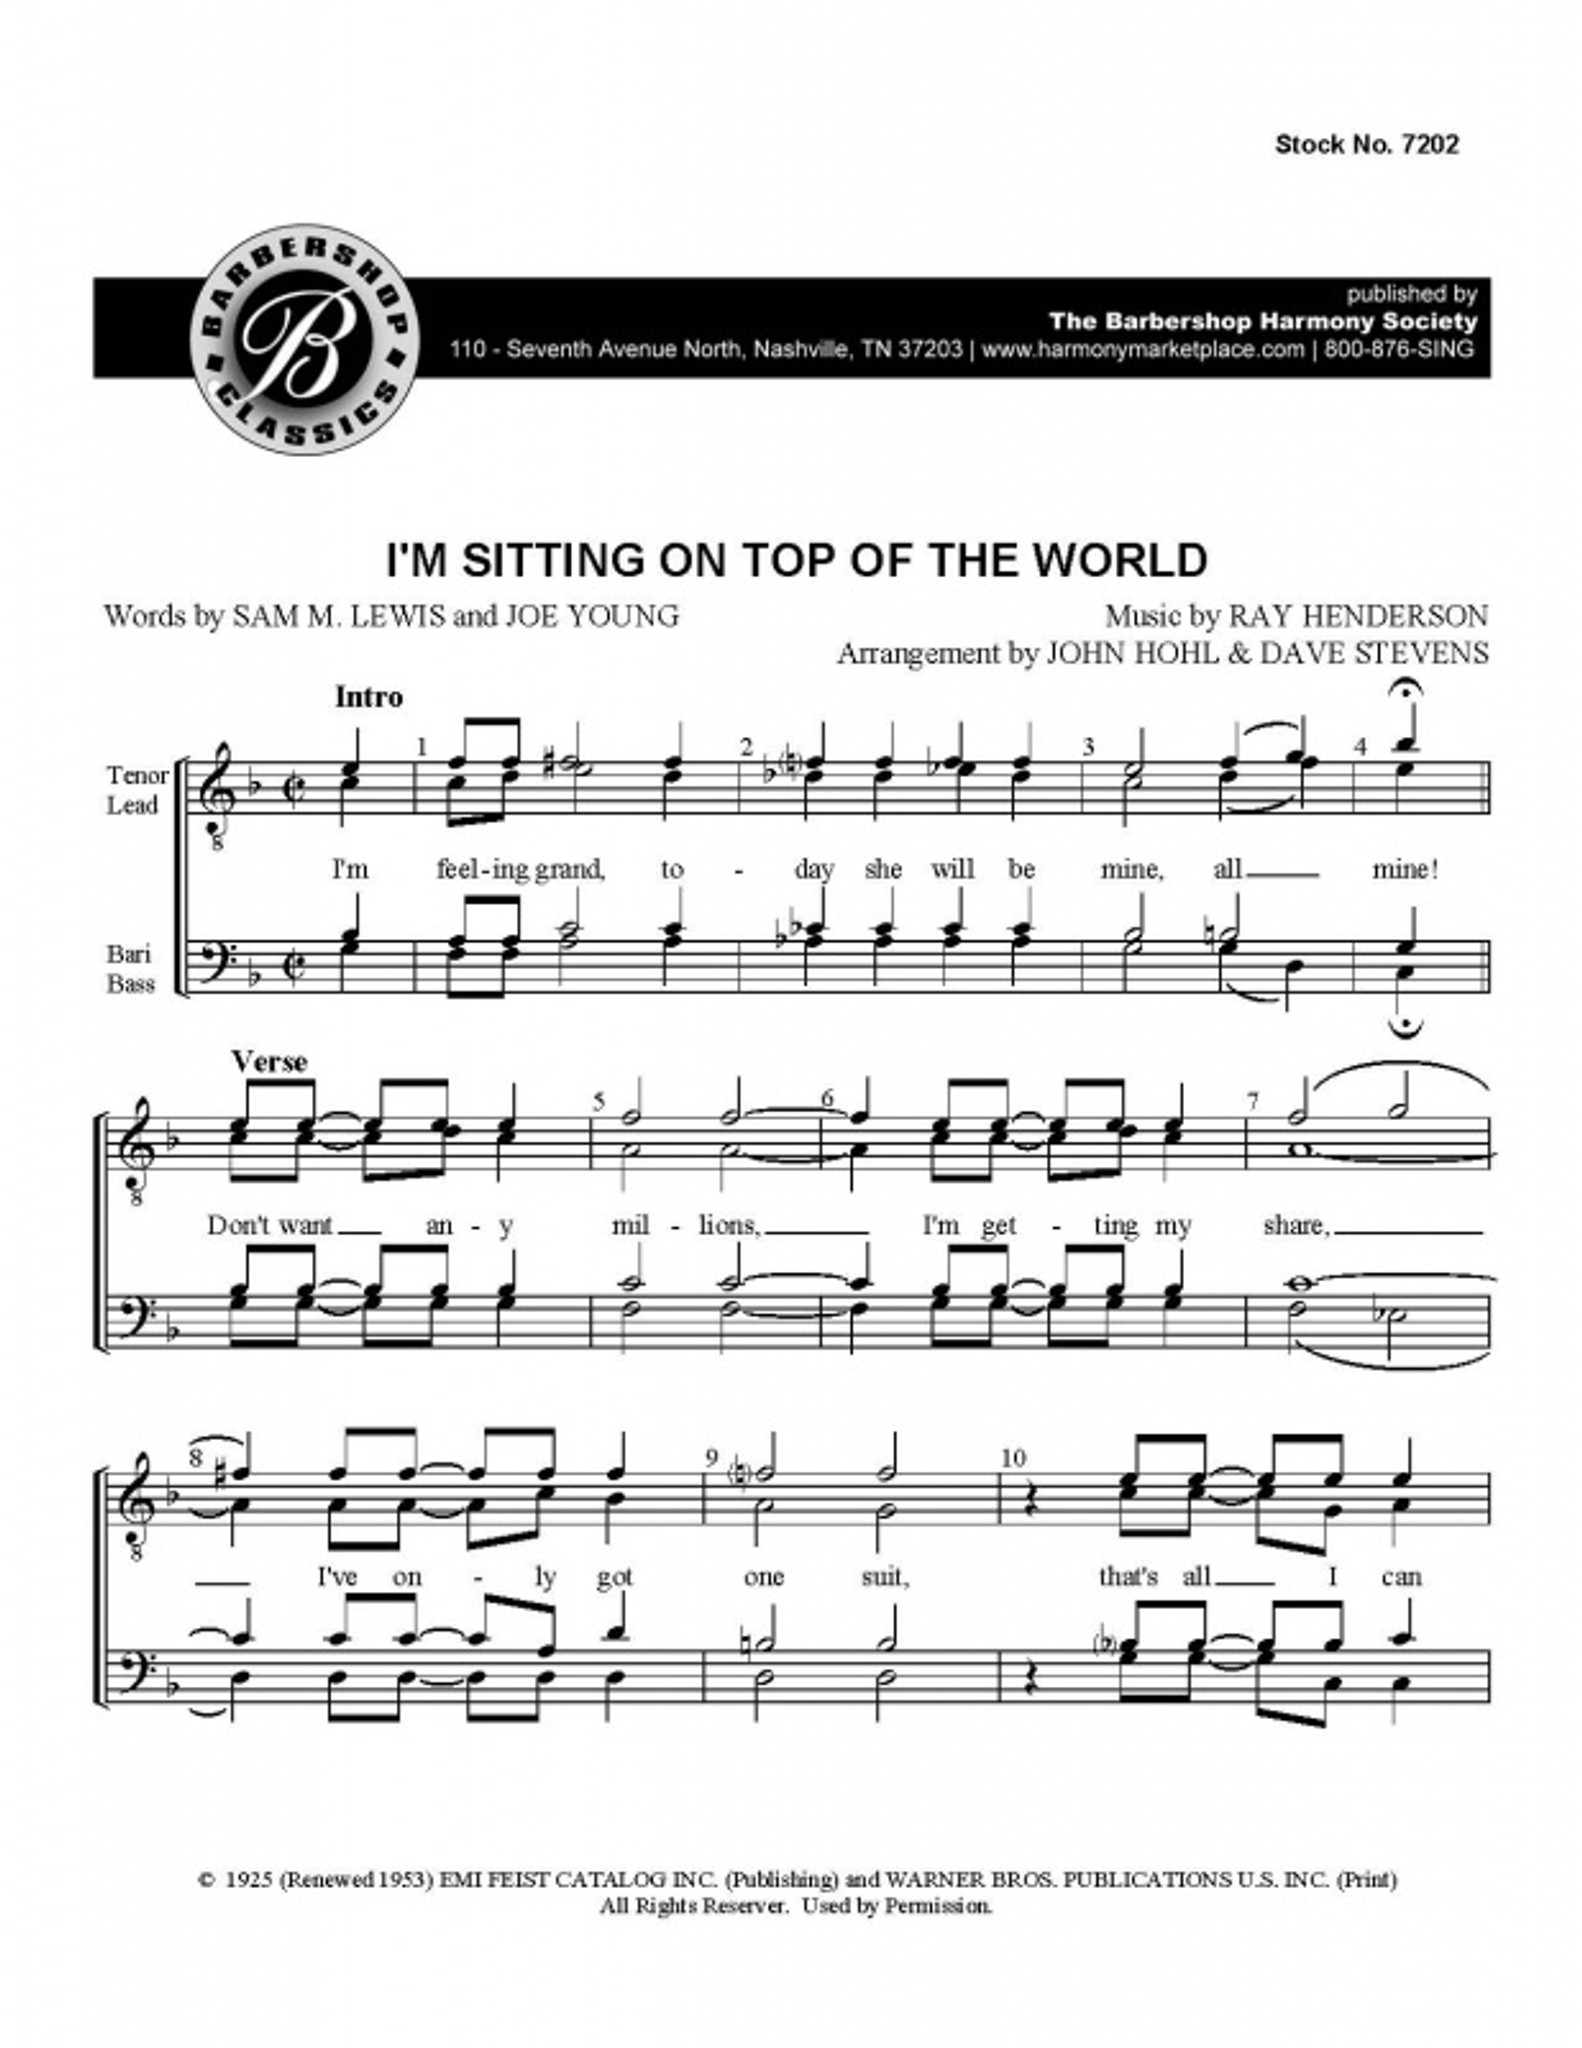 On Top of the World (TTBB) (arr. Hohl & Stevens) - Barbershop Harmony Society